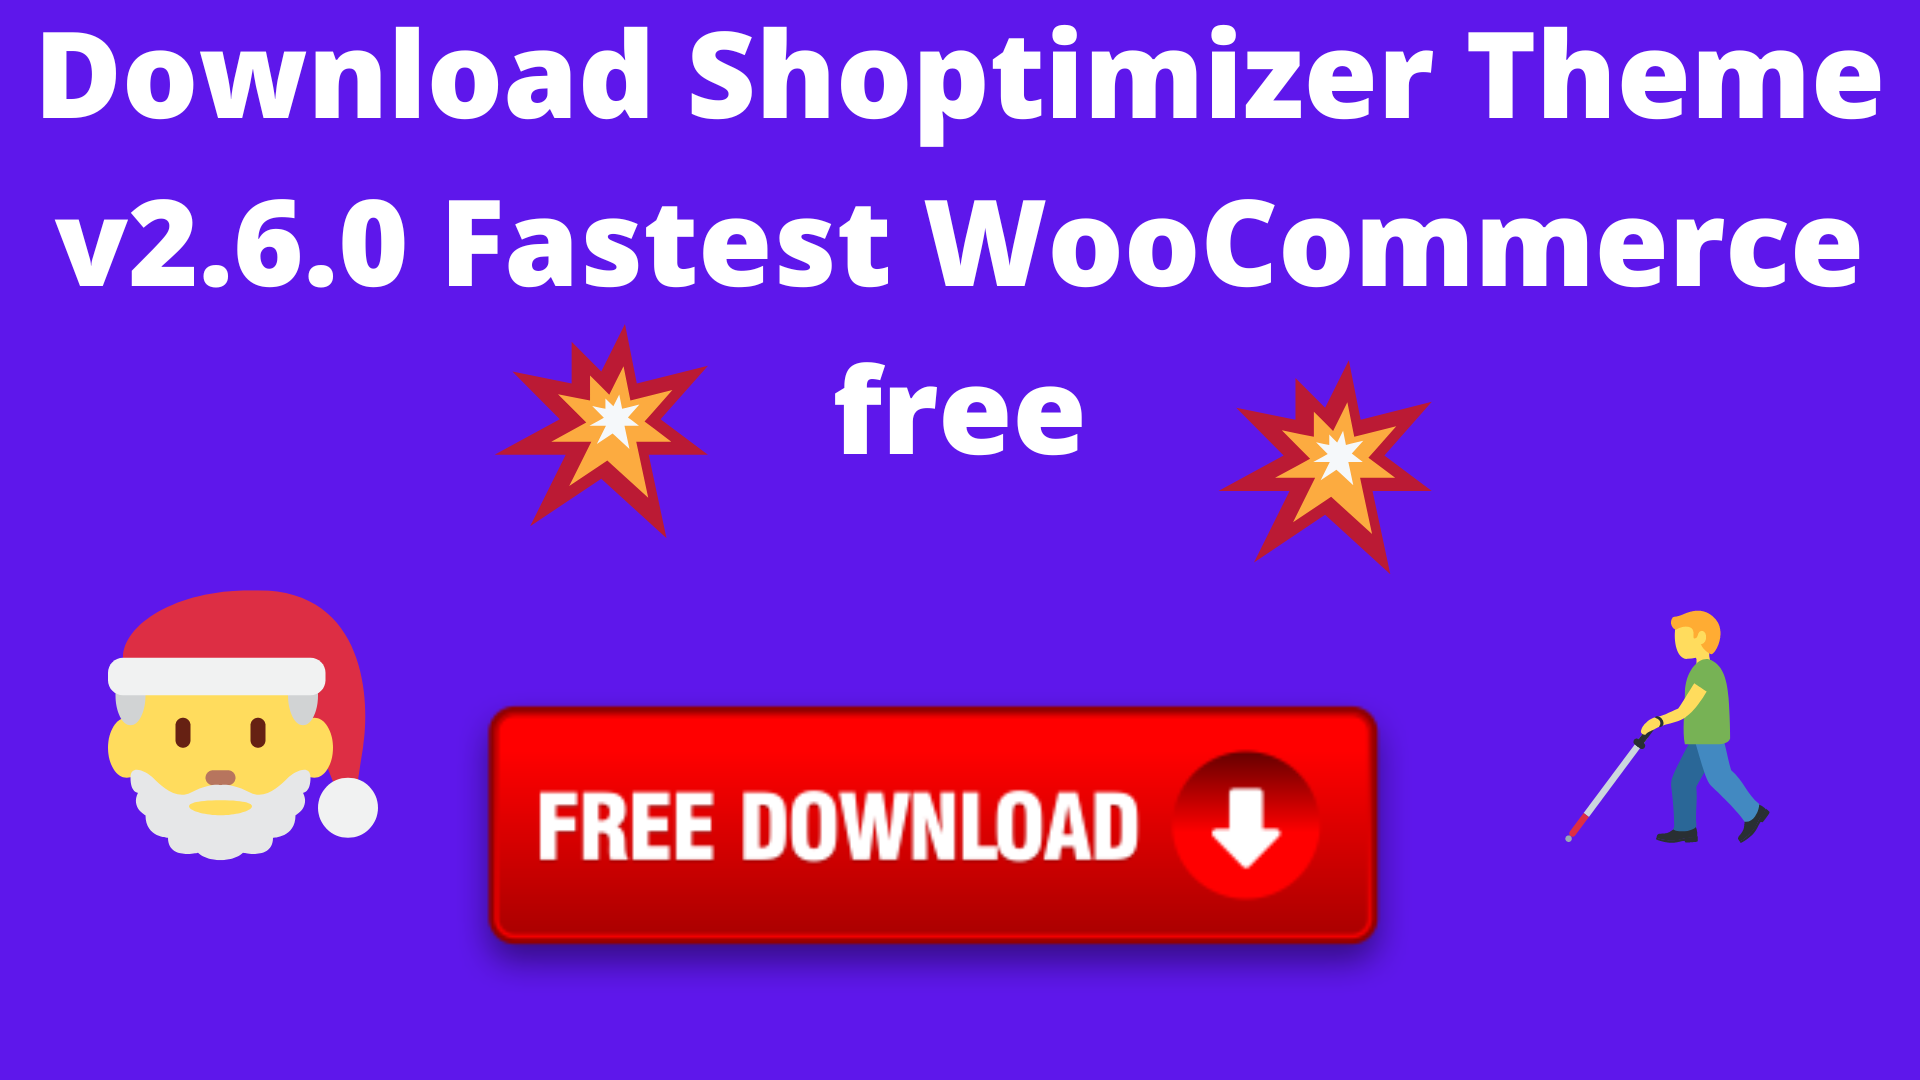 Download shoptimizer theme v2. 6. 0 fastest woocommerce free